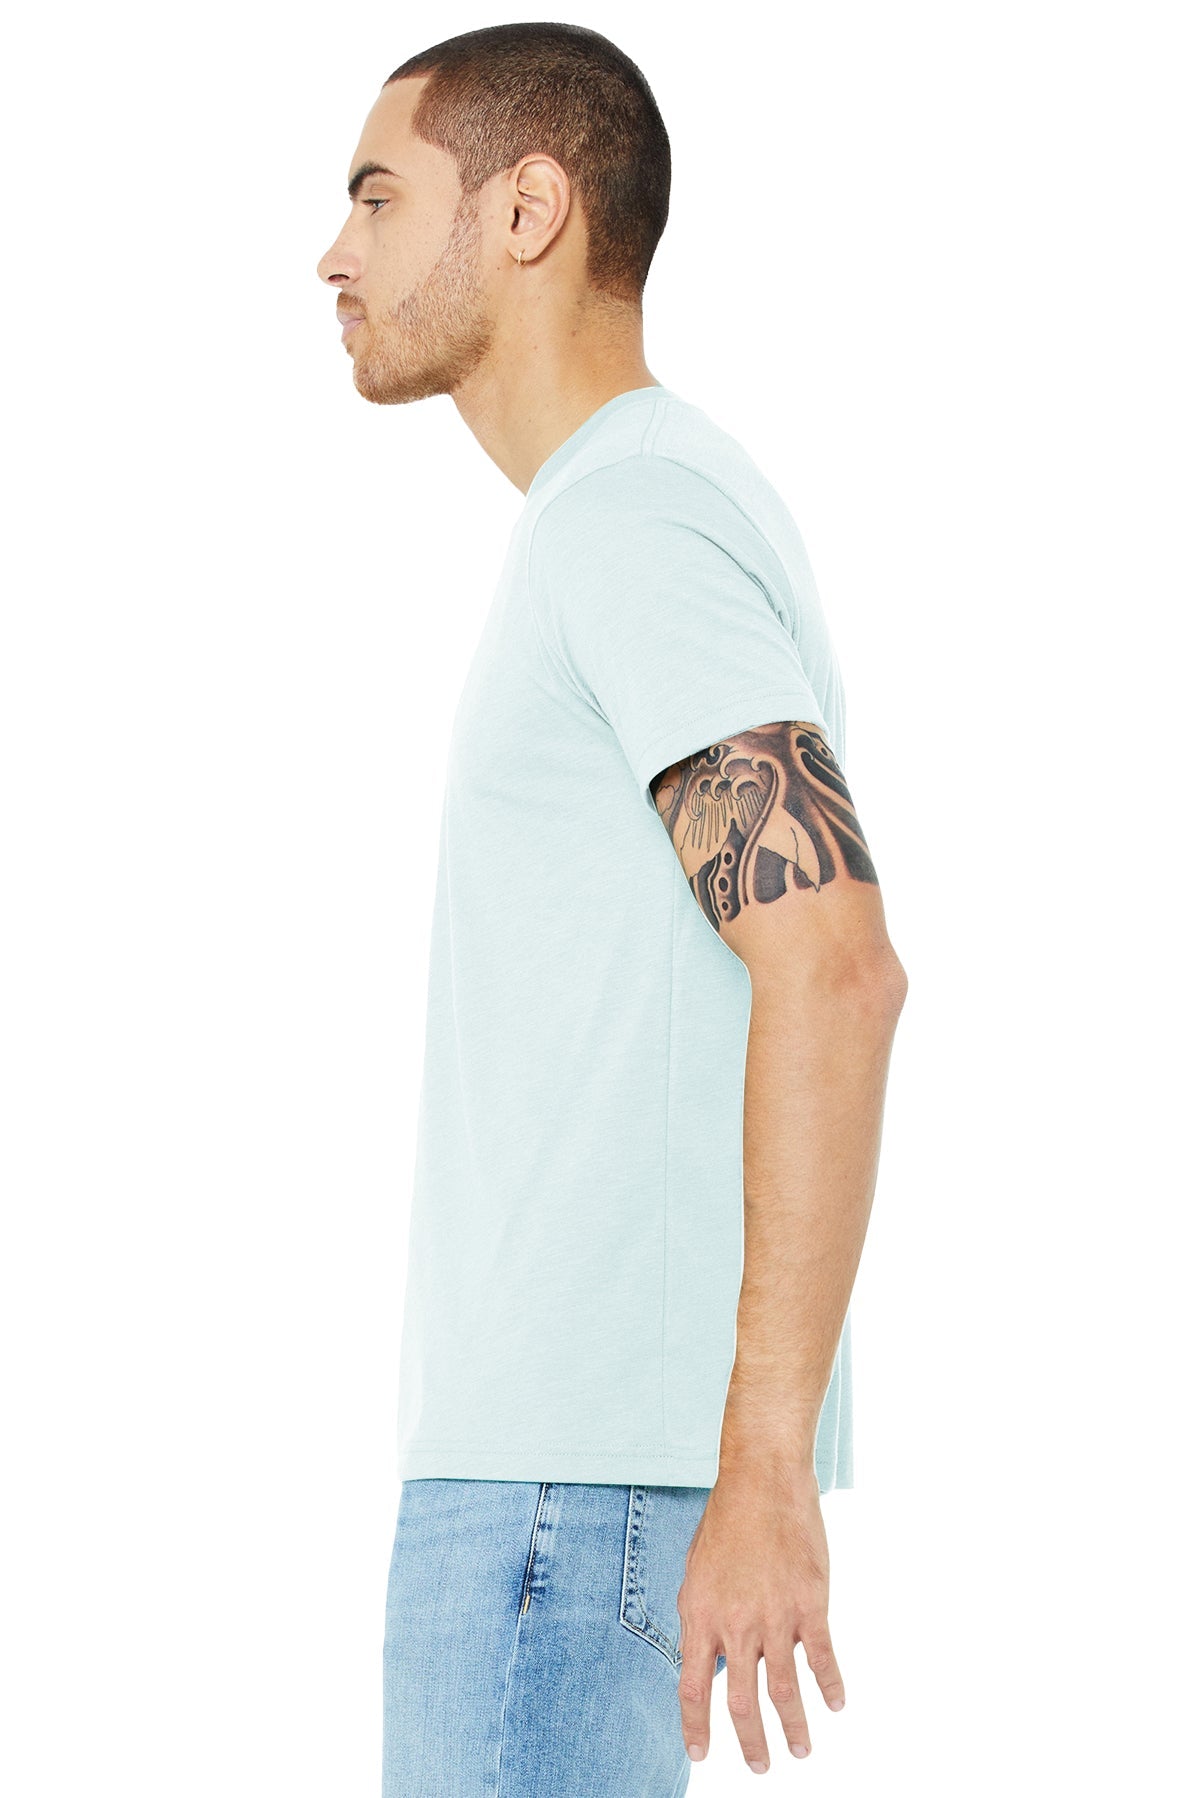 bella + canvas unisex triblend short sleeve t-shirt 3413c ice blue triblnd